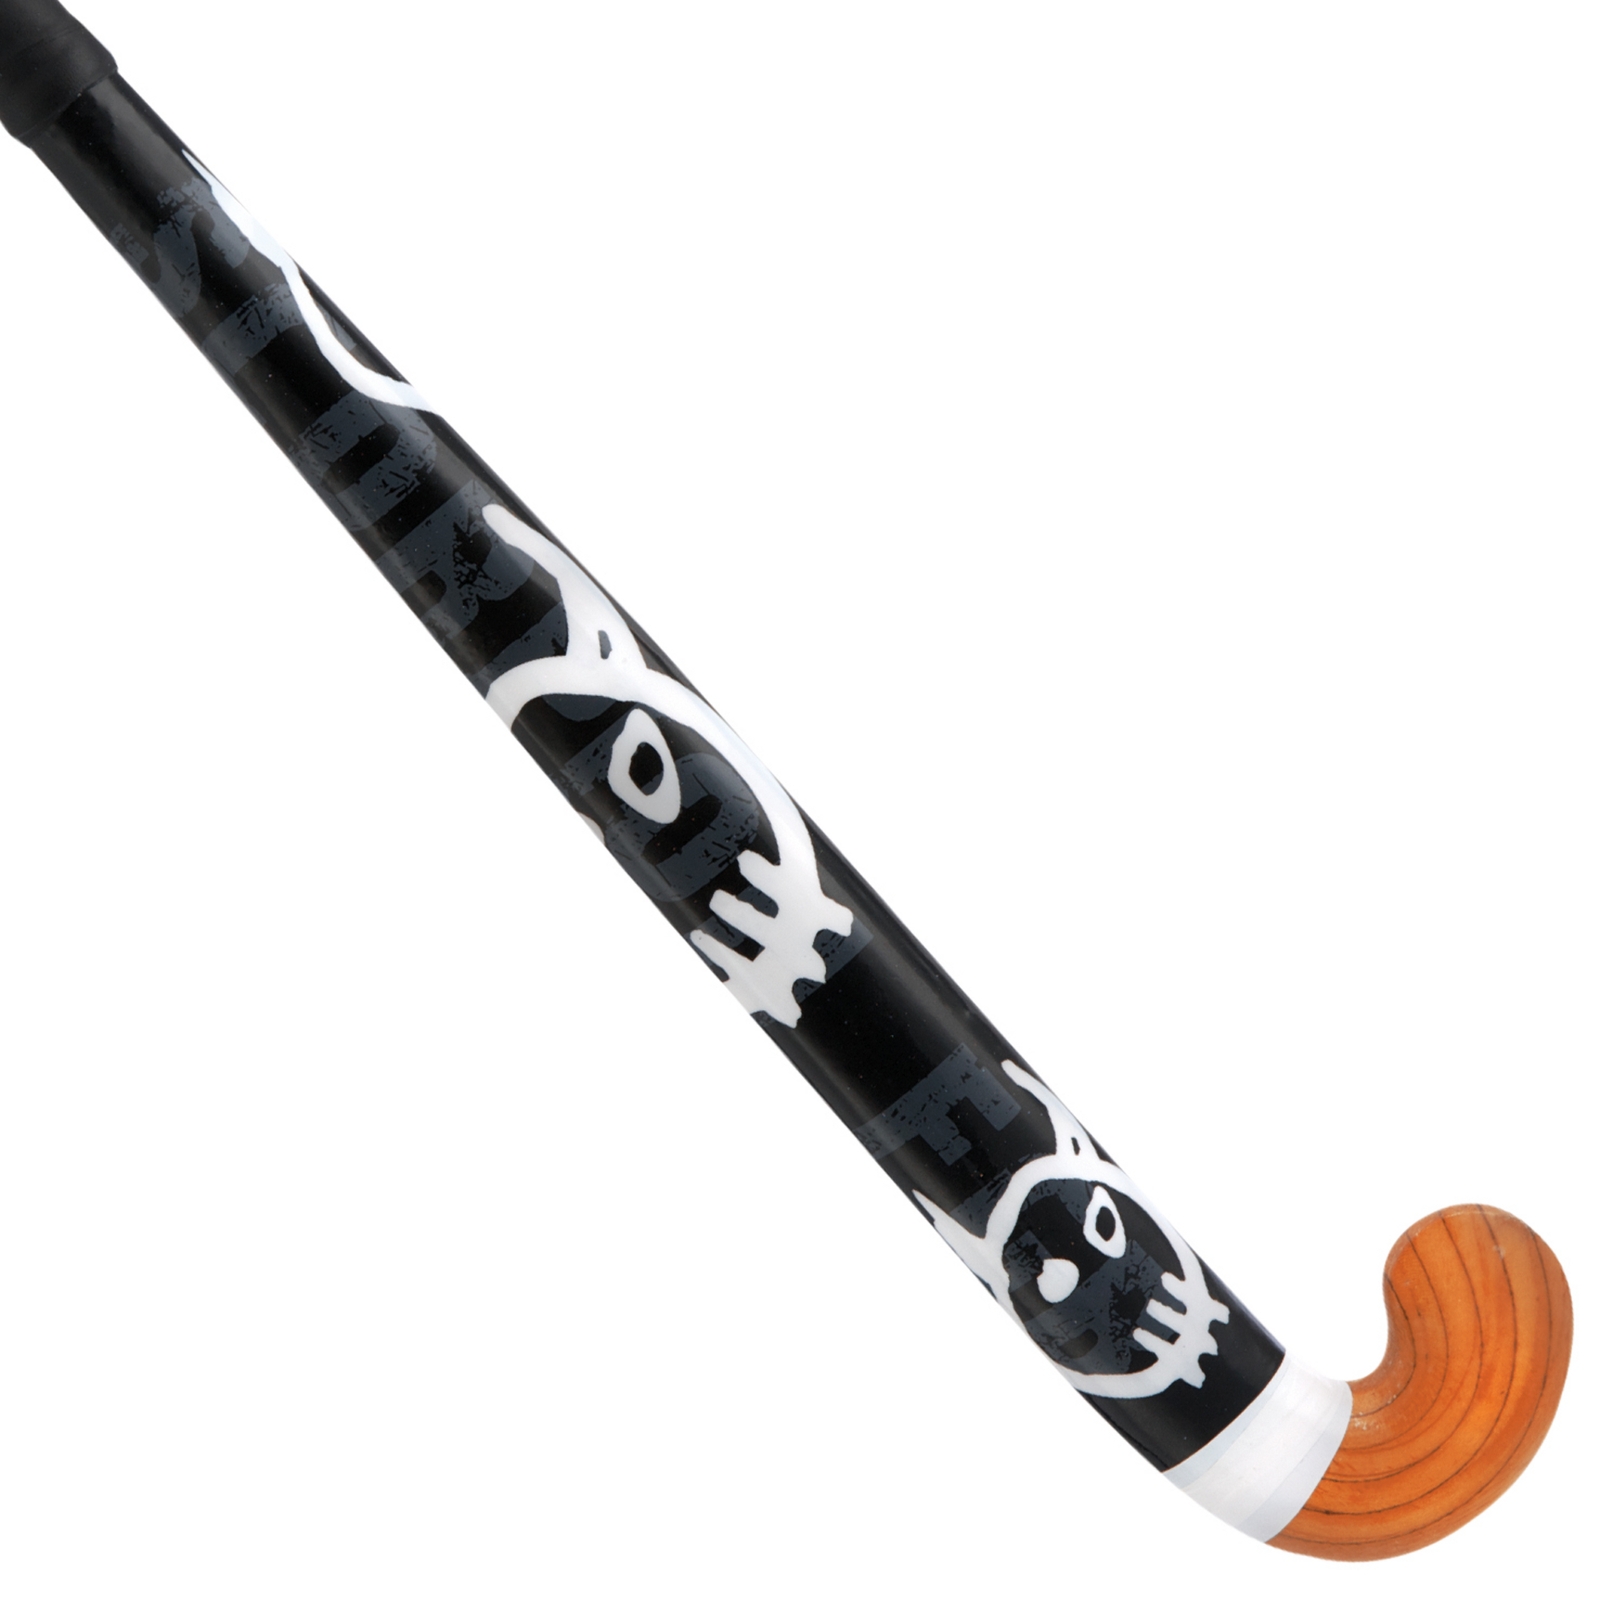 Mercian Scorpion FGB Hockey Stick - Black - 36in